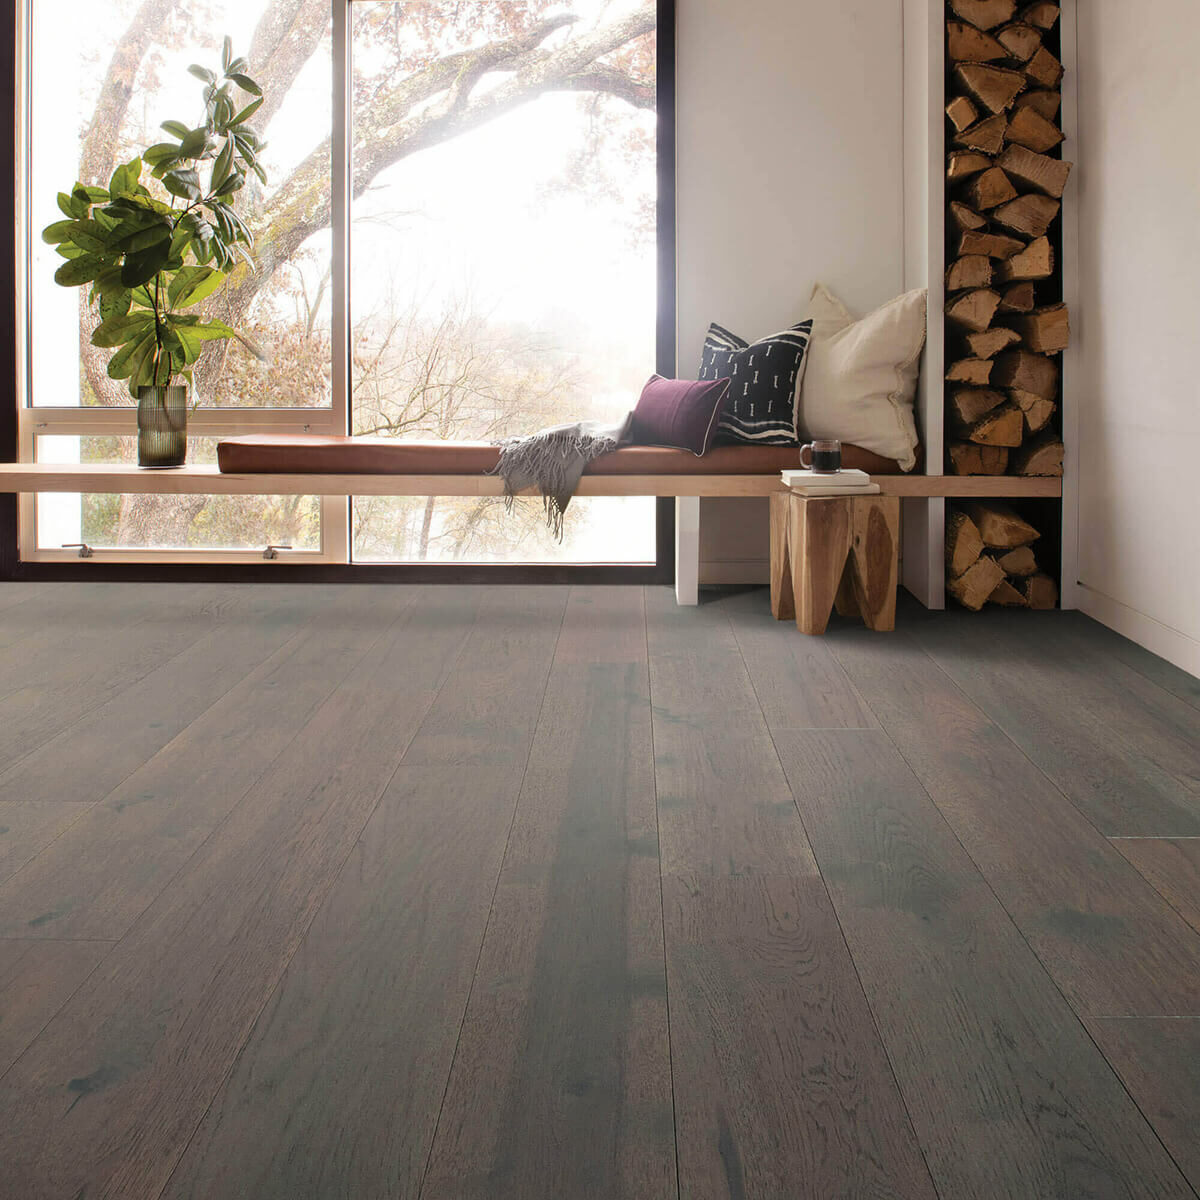 Hardwood flooring | Tom's Carpet & Flooring Outlet